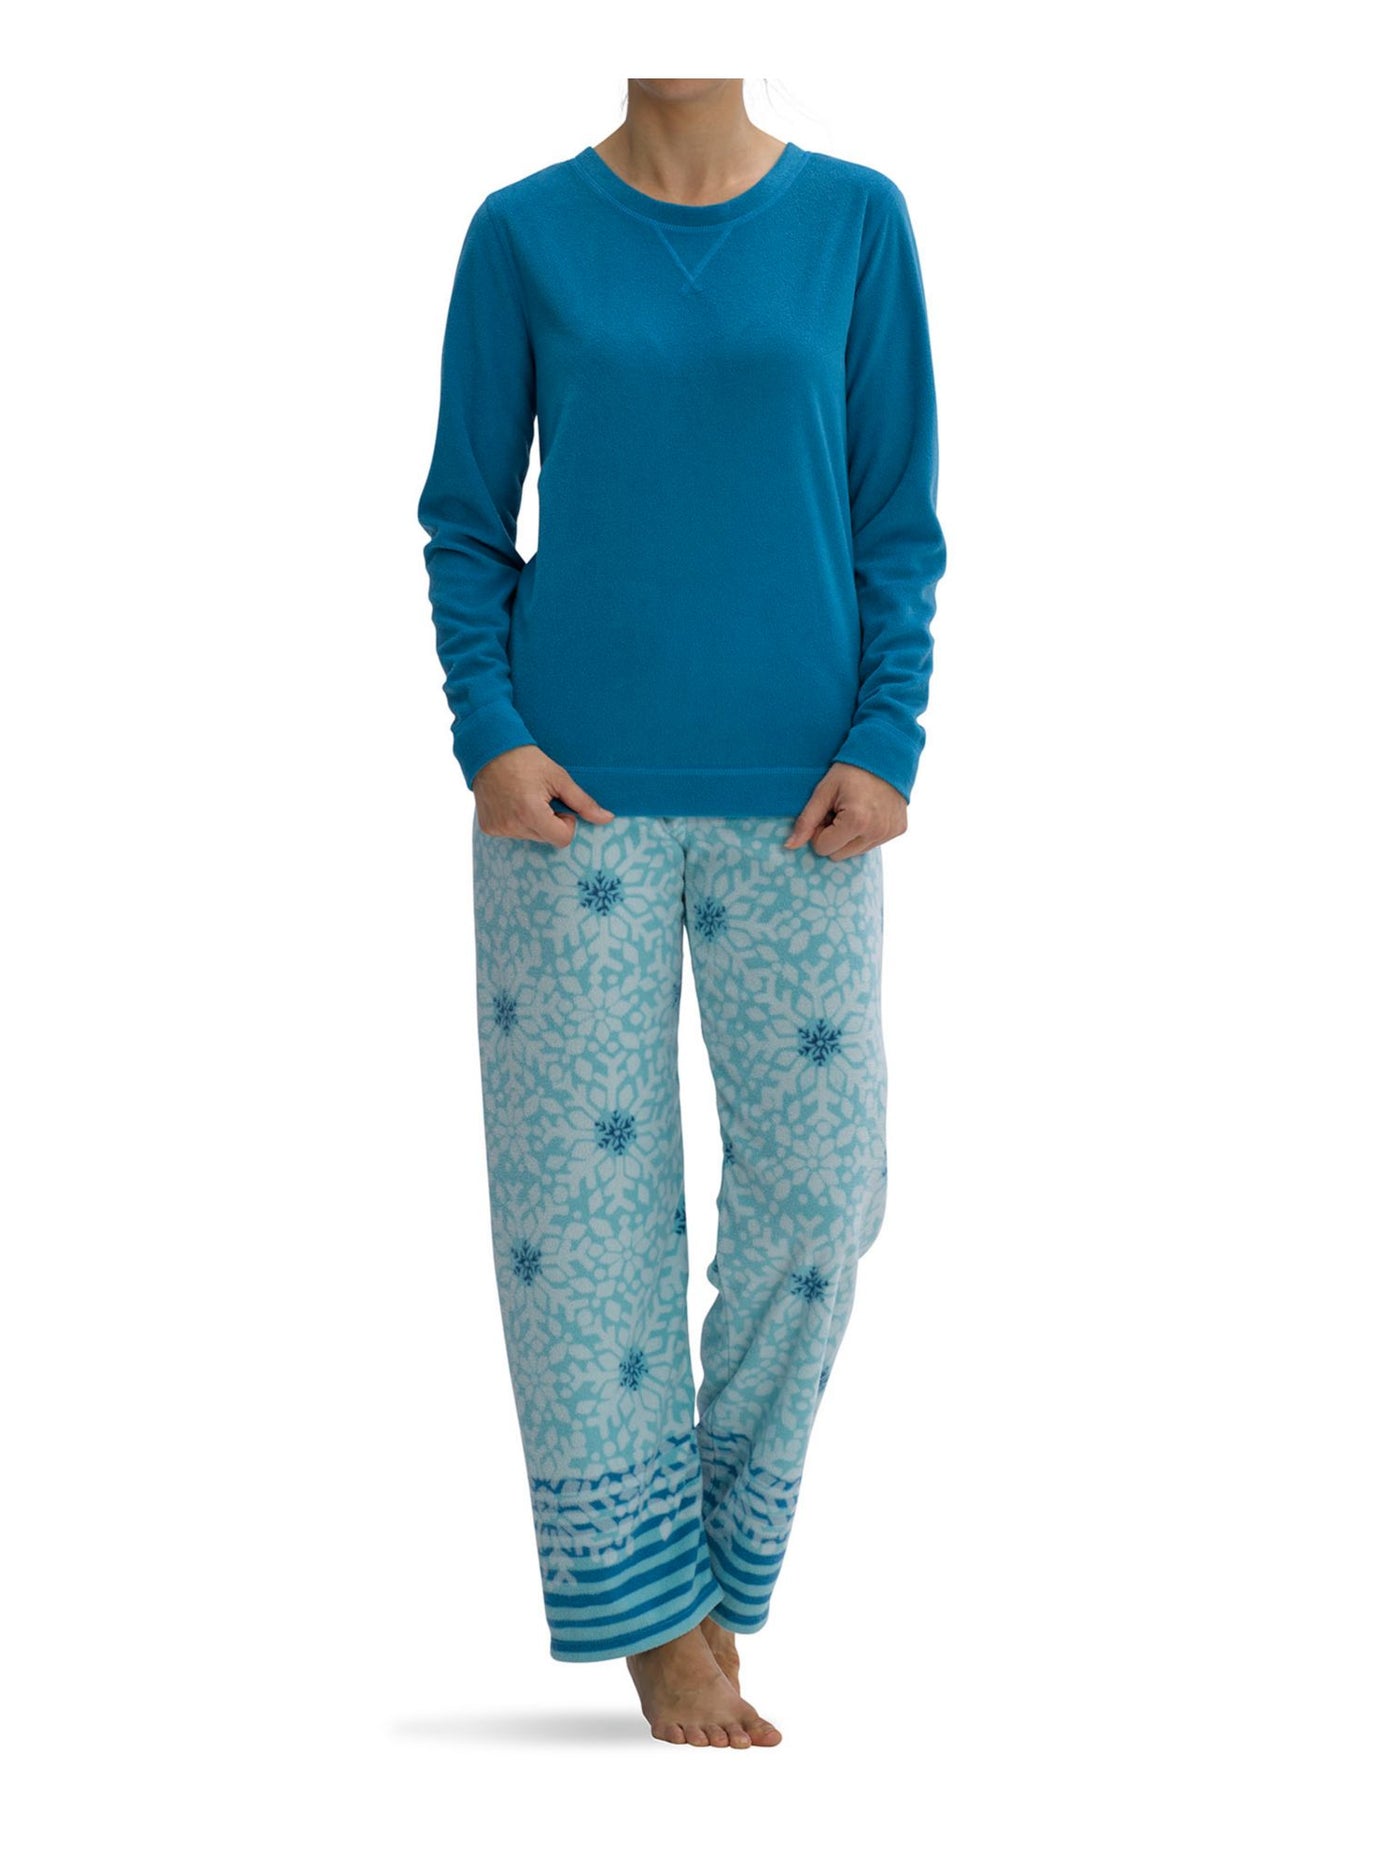 HUE Intimates Blue Crew Neck Sleep Shirt Pajama Top XL